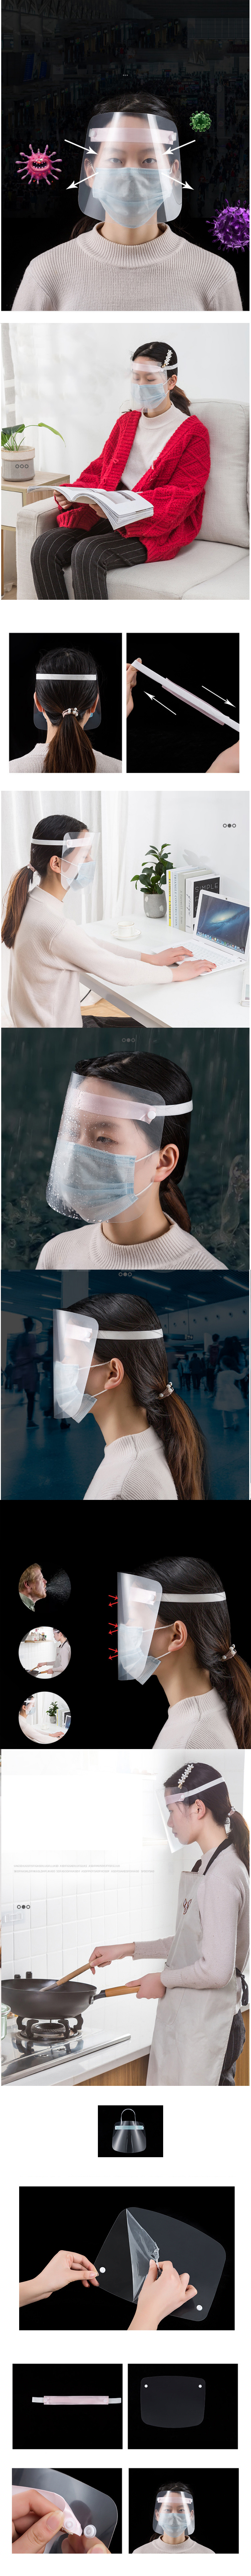 ZANLURE-10pcs-Adjustable-Transparent-Anti-Splash-Dust-proof-Protect-Full-Face-Covering-Safety-Mask-V-1656443-1